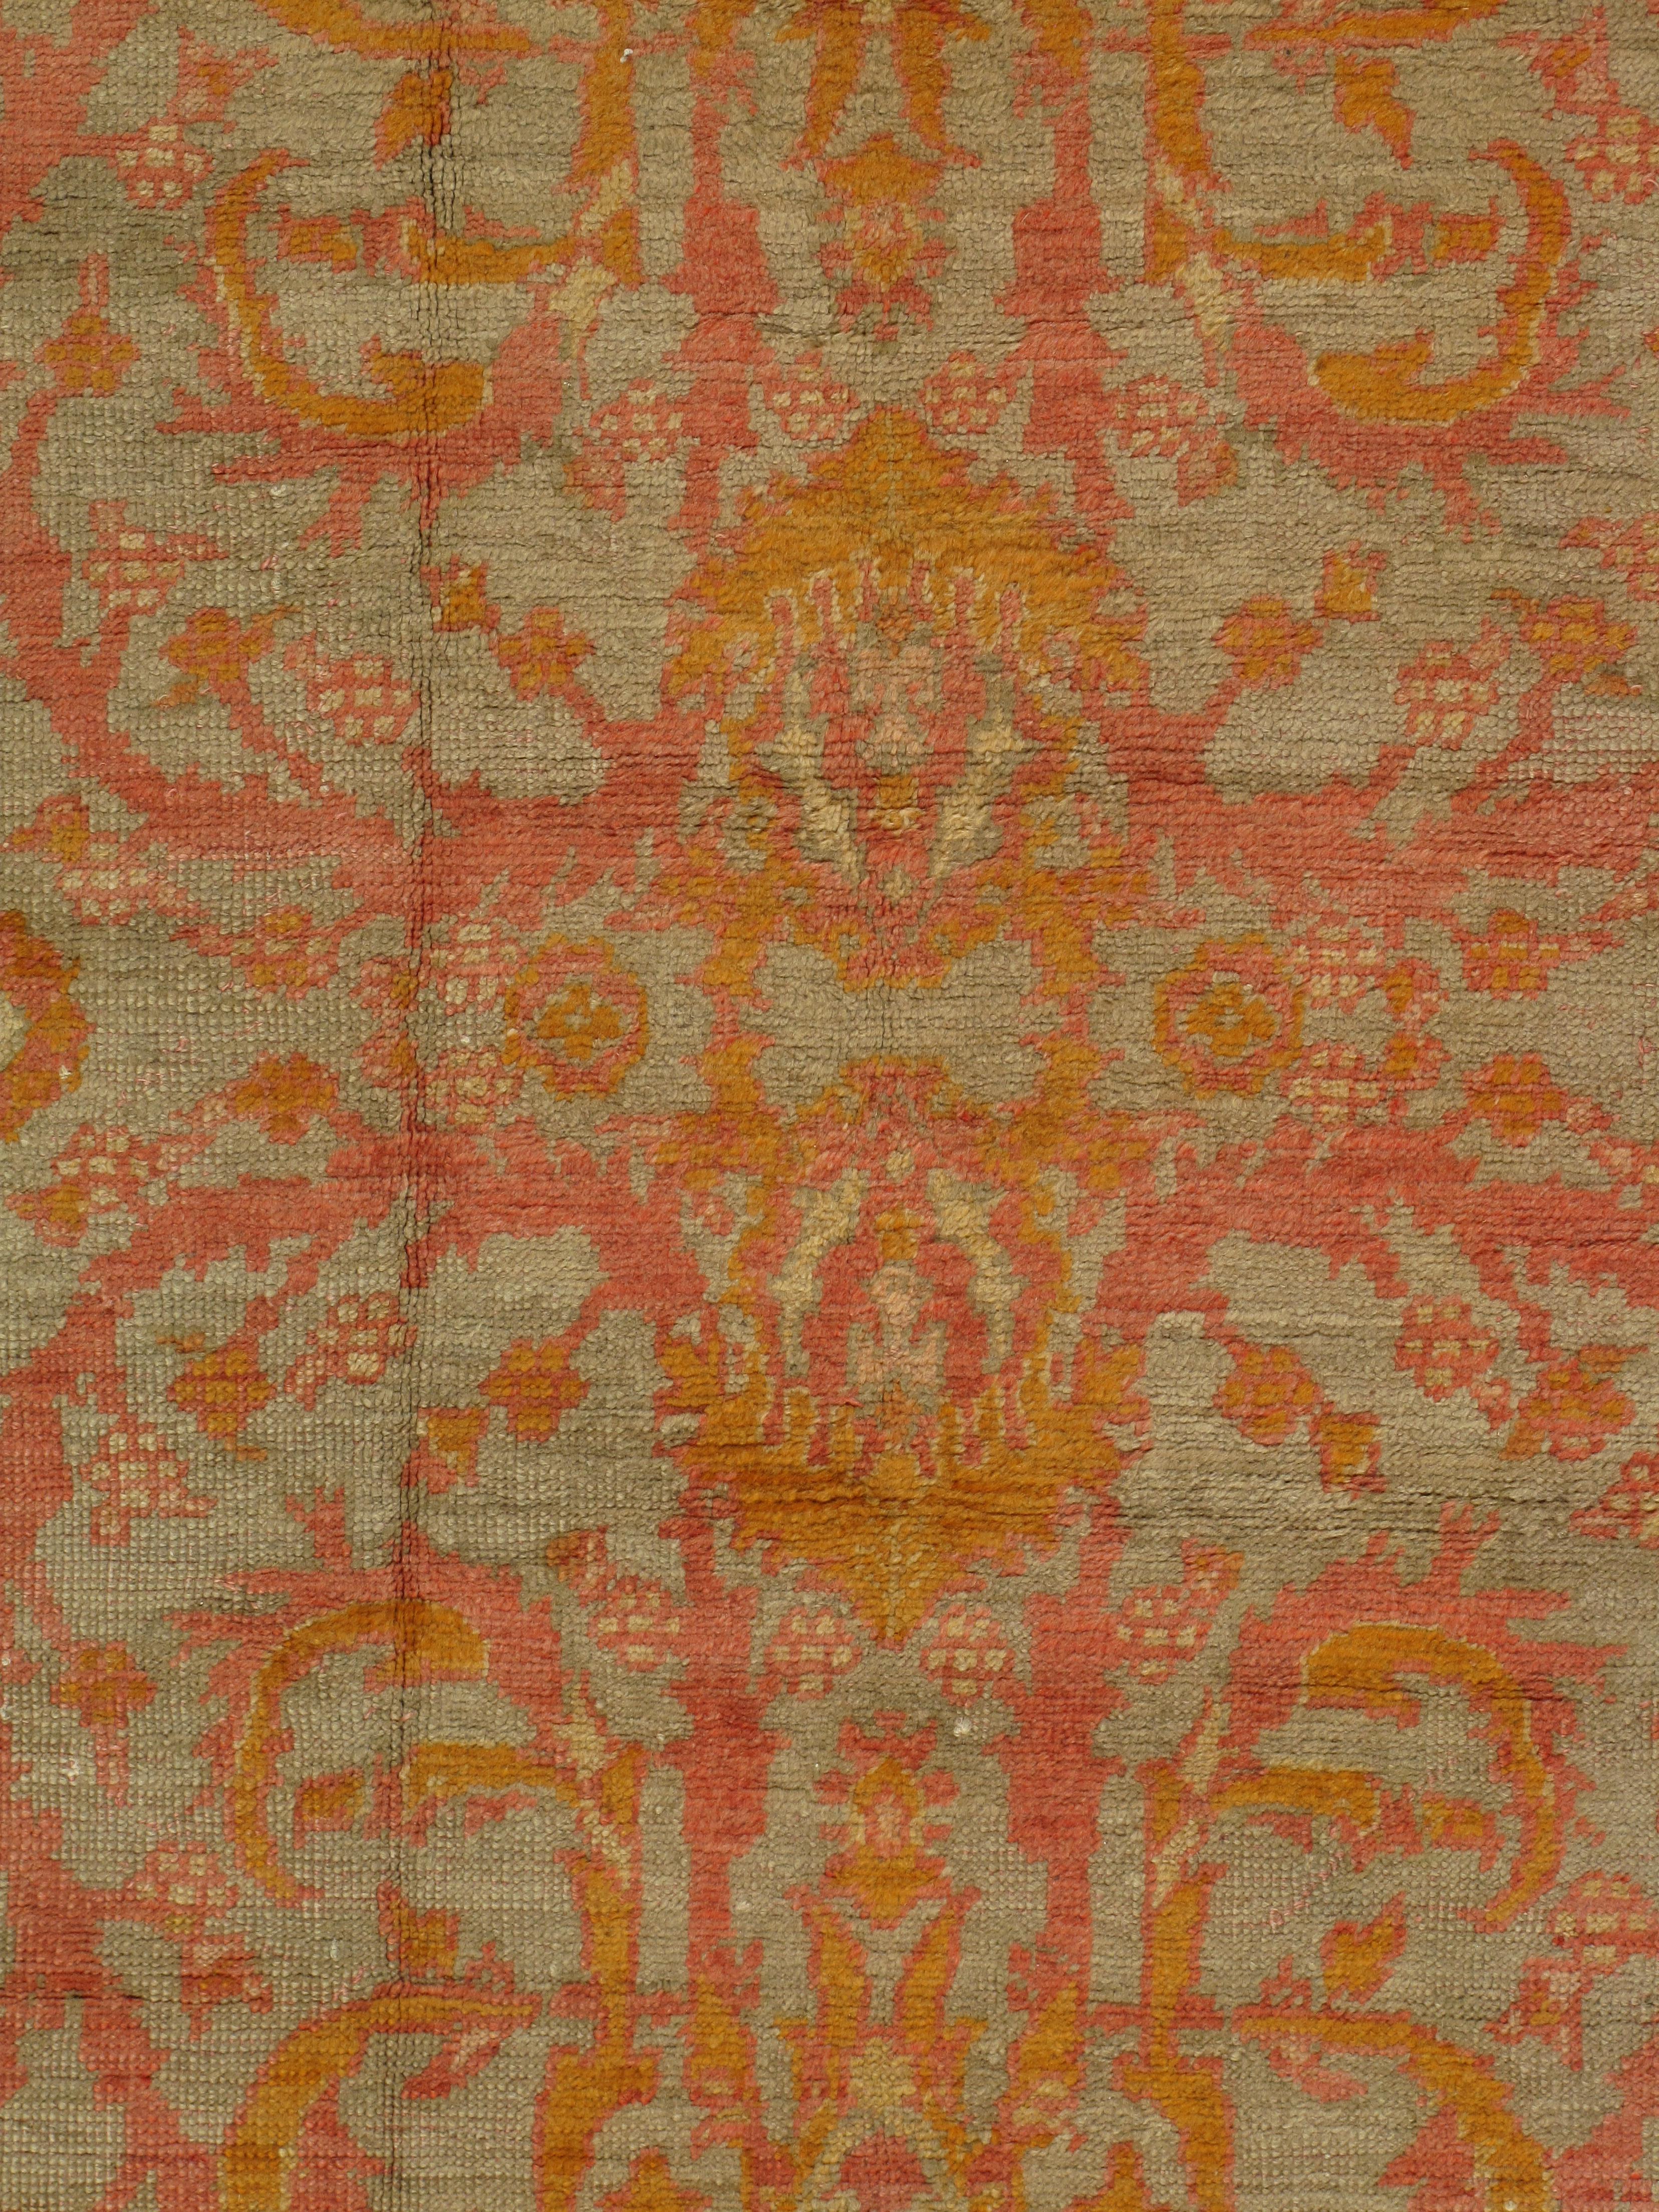 Antique Oushak Carpet, Handmade Turkish Oriental Rug, Saffron, Coral, Light Blue For Sale 9